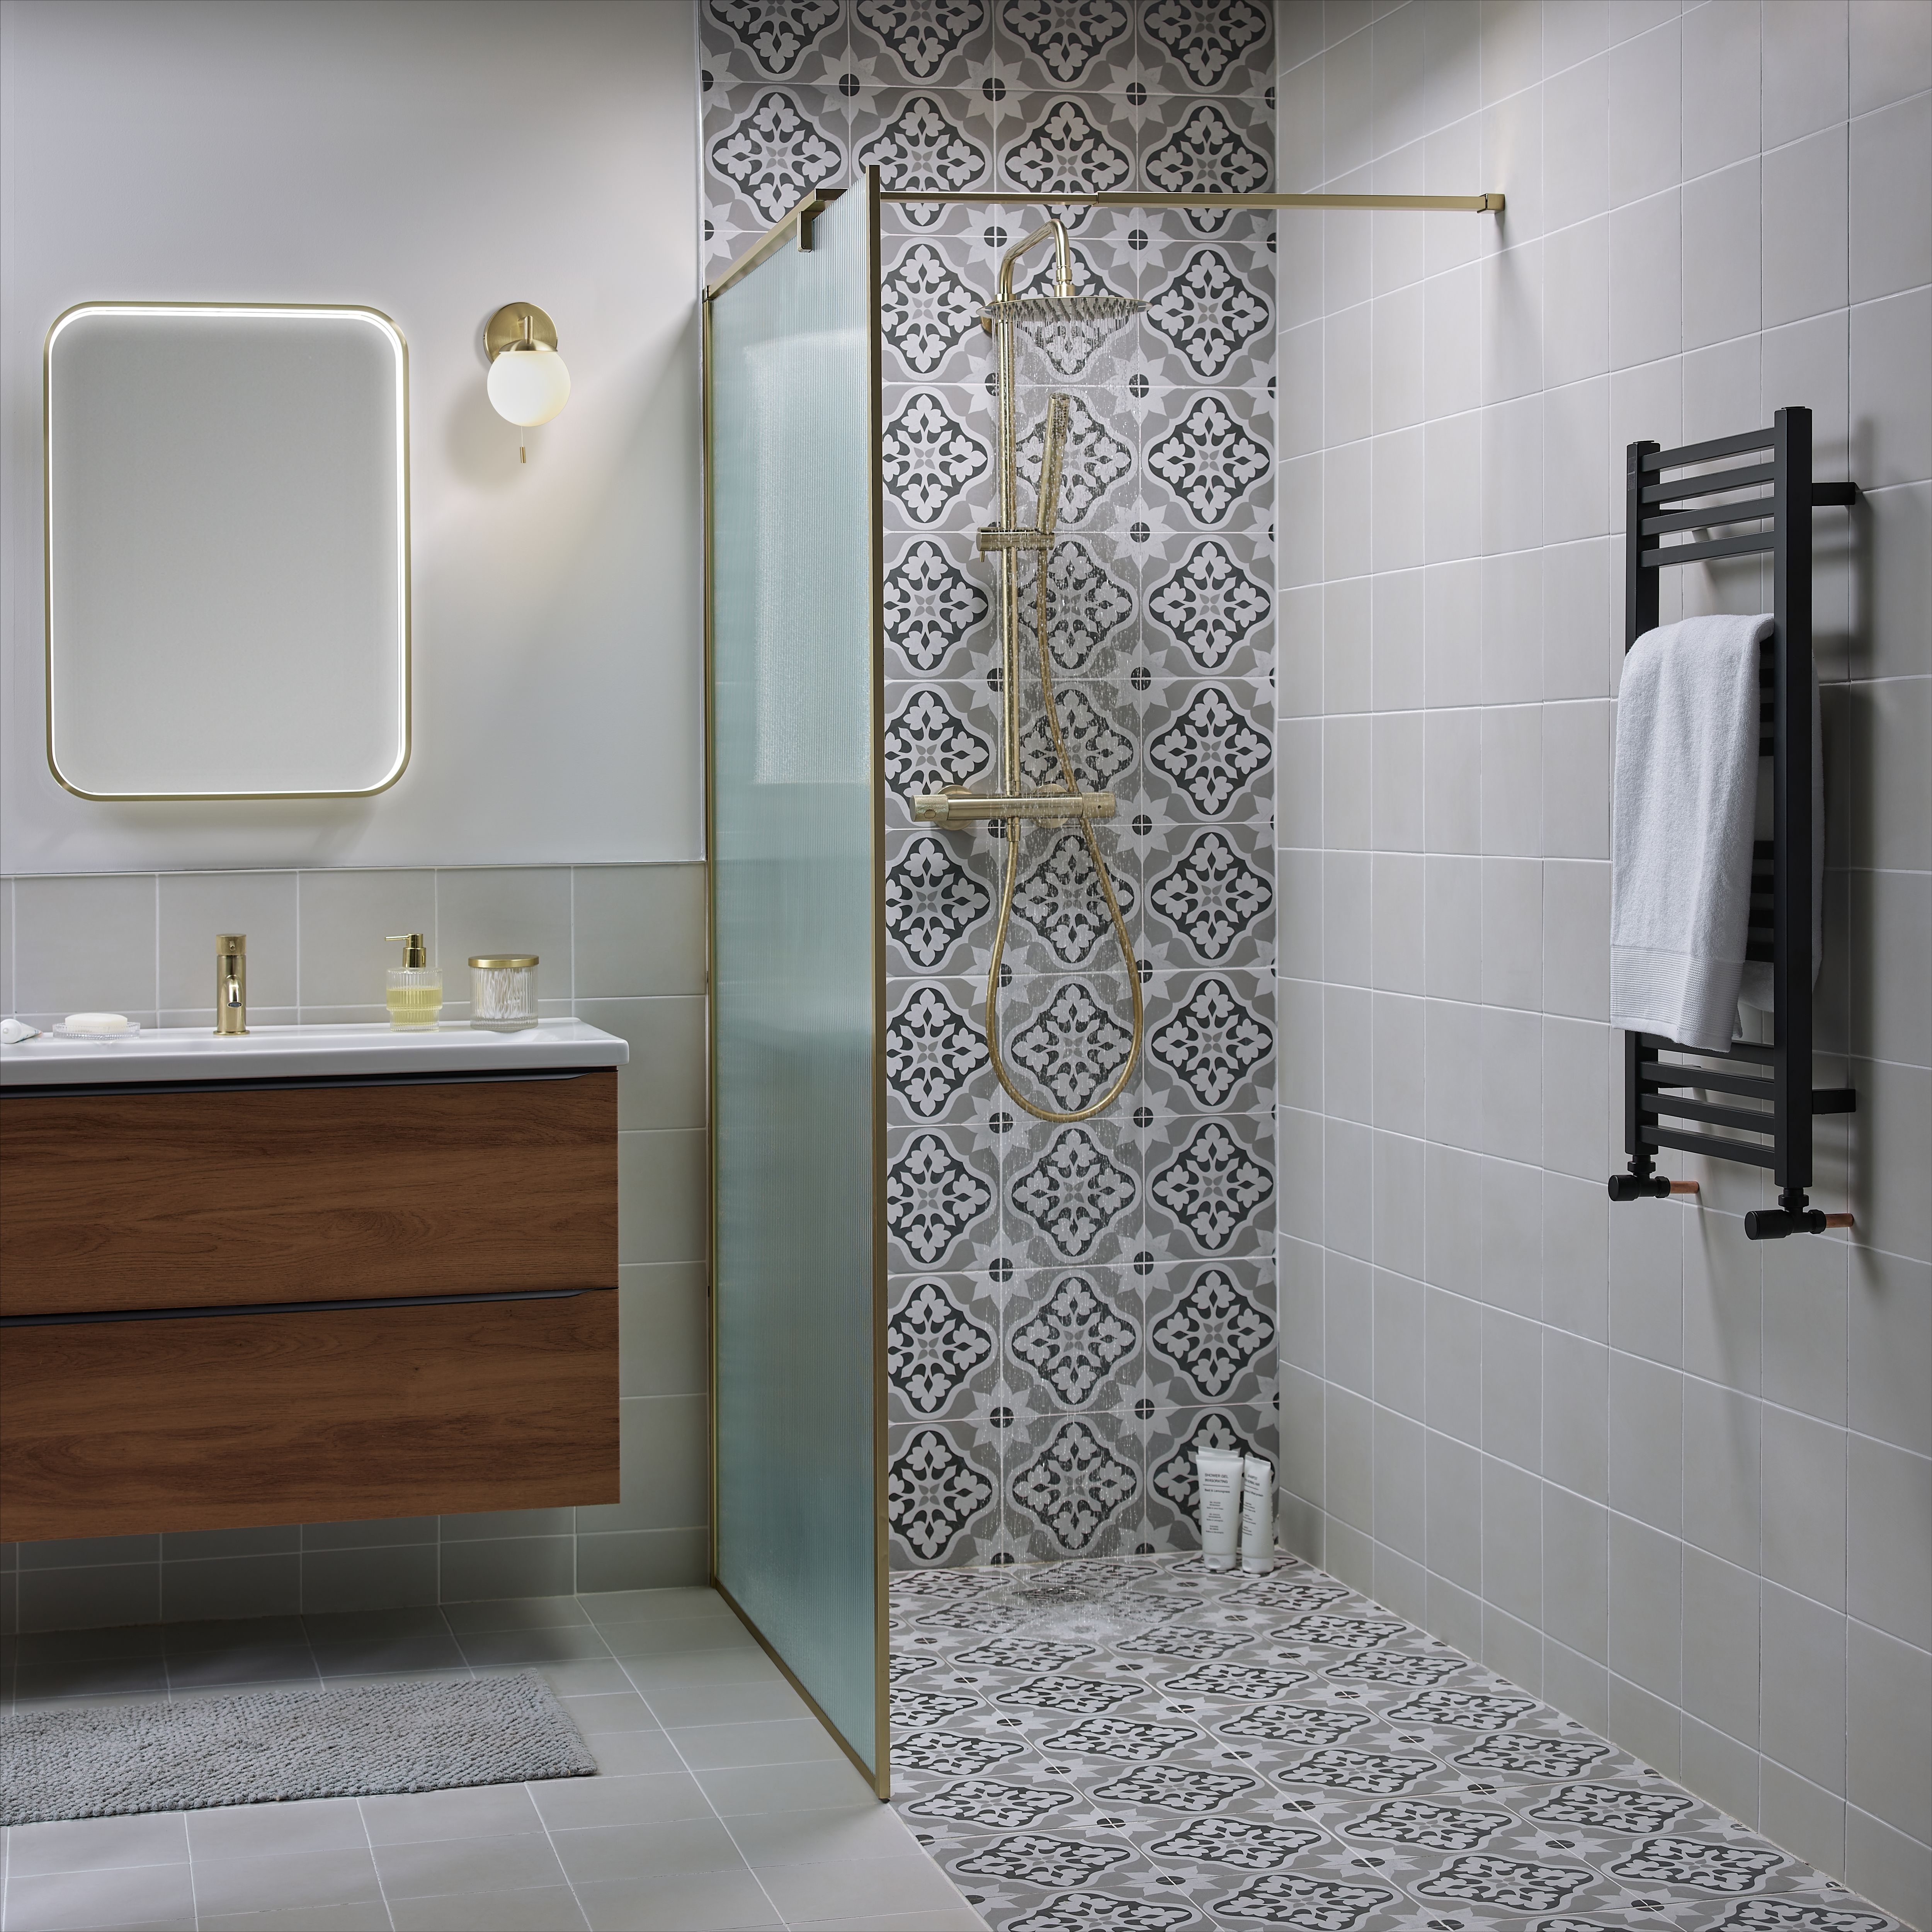 Sensio Aspect Brass effect Rectangular Wall-mounted Bathroom Illuminated mirror (H)70cm (W)50cm